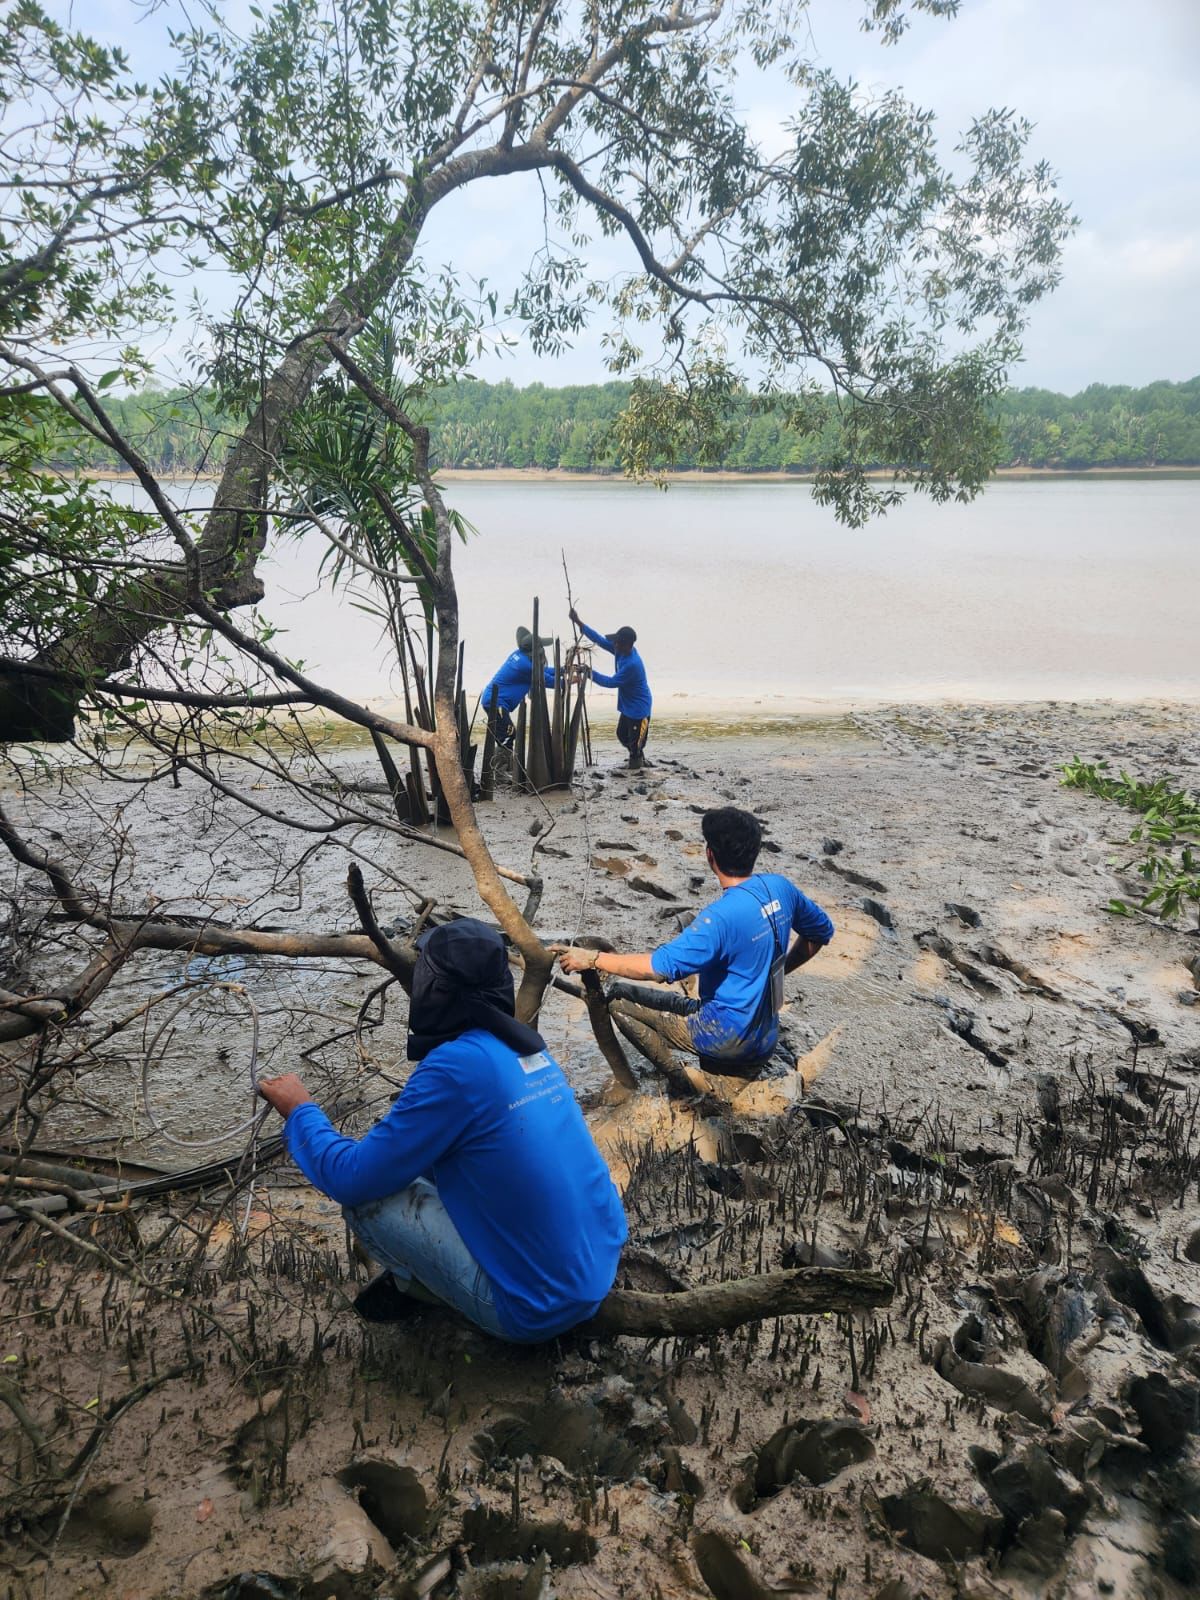 Kunjungan lapangan menilai kondisi eko-hidrologis mangrove dengan menarik transek sepanjang 100 m untuk mengetahui sebaran mangrove berdasarkan zonasi dan ketinggian substratnya